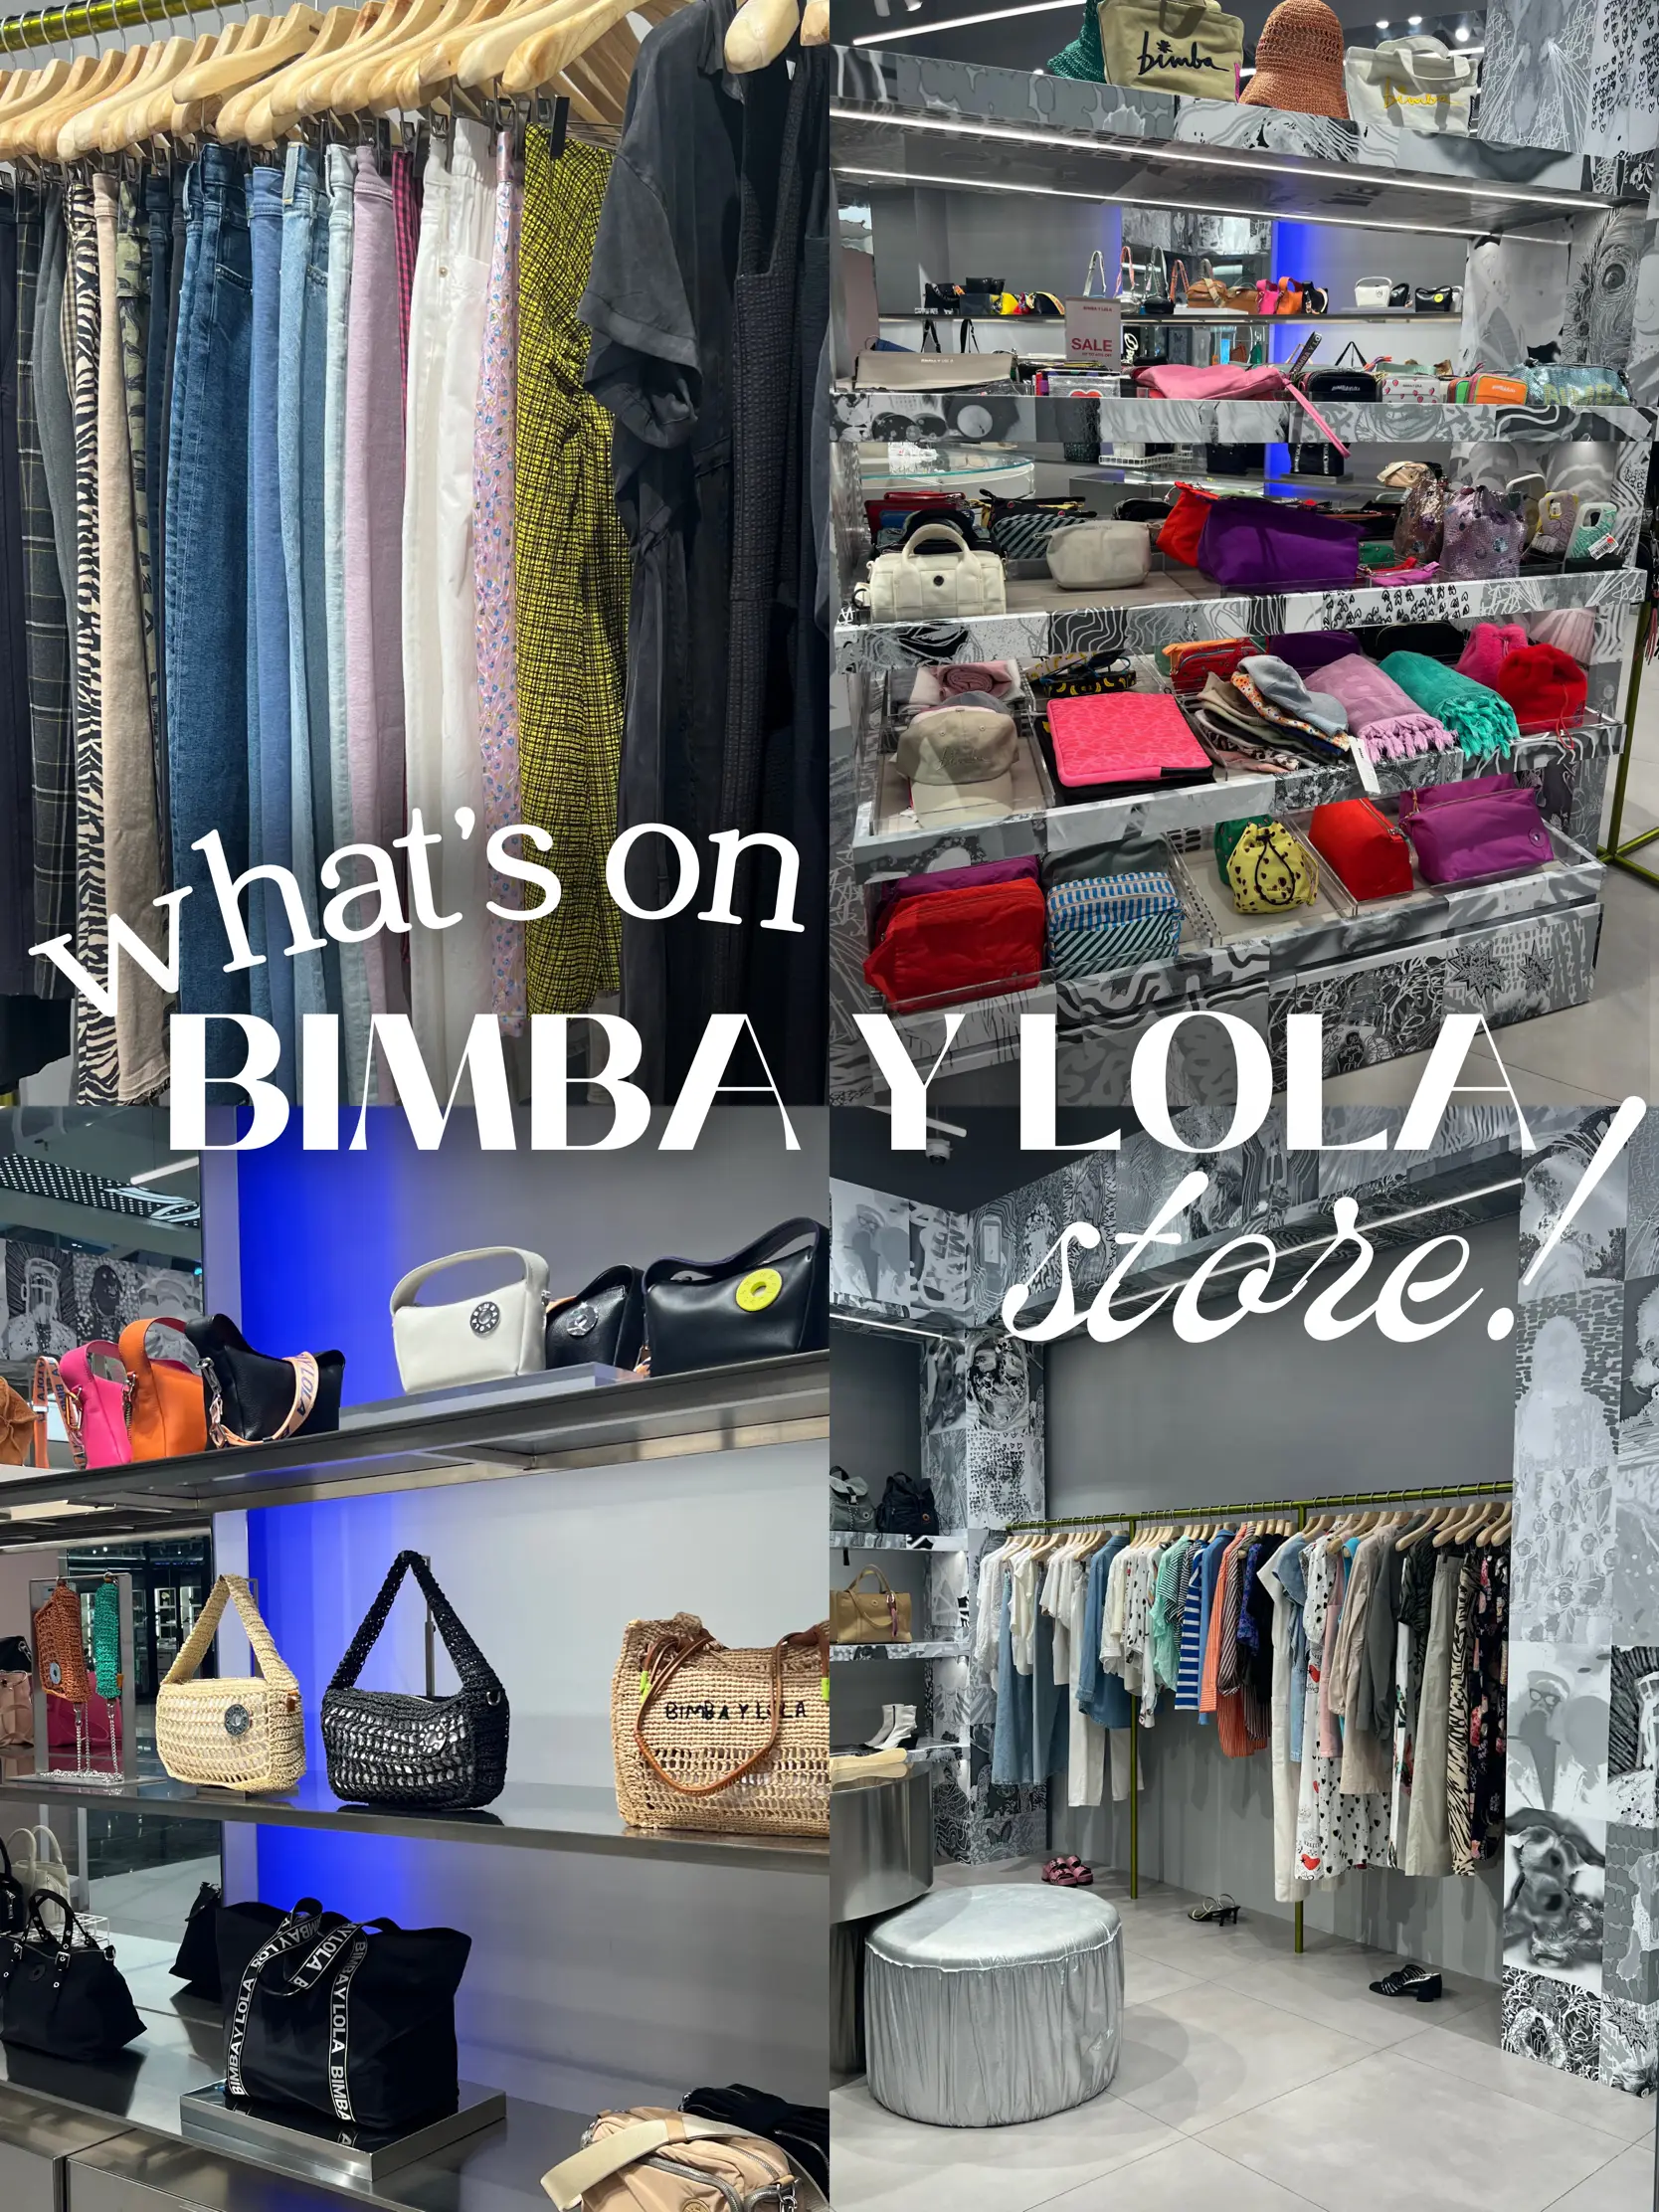 Bimba y lola dress - Vinted